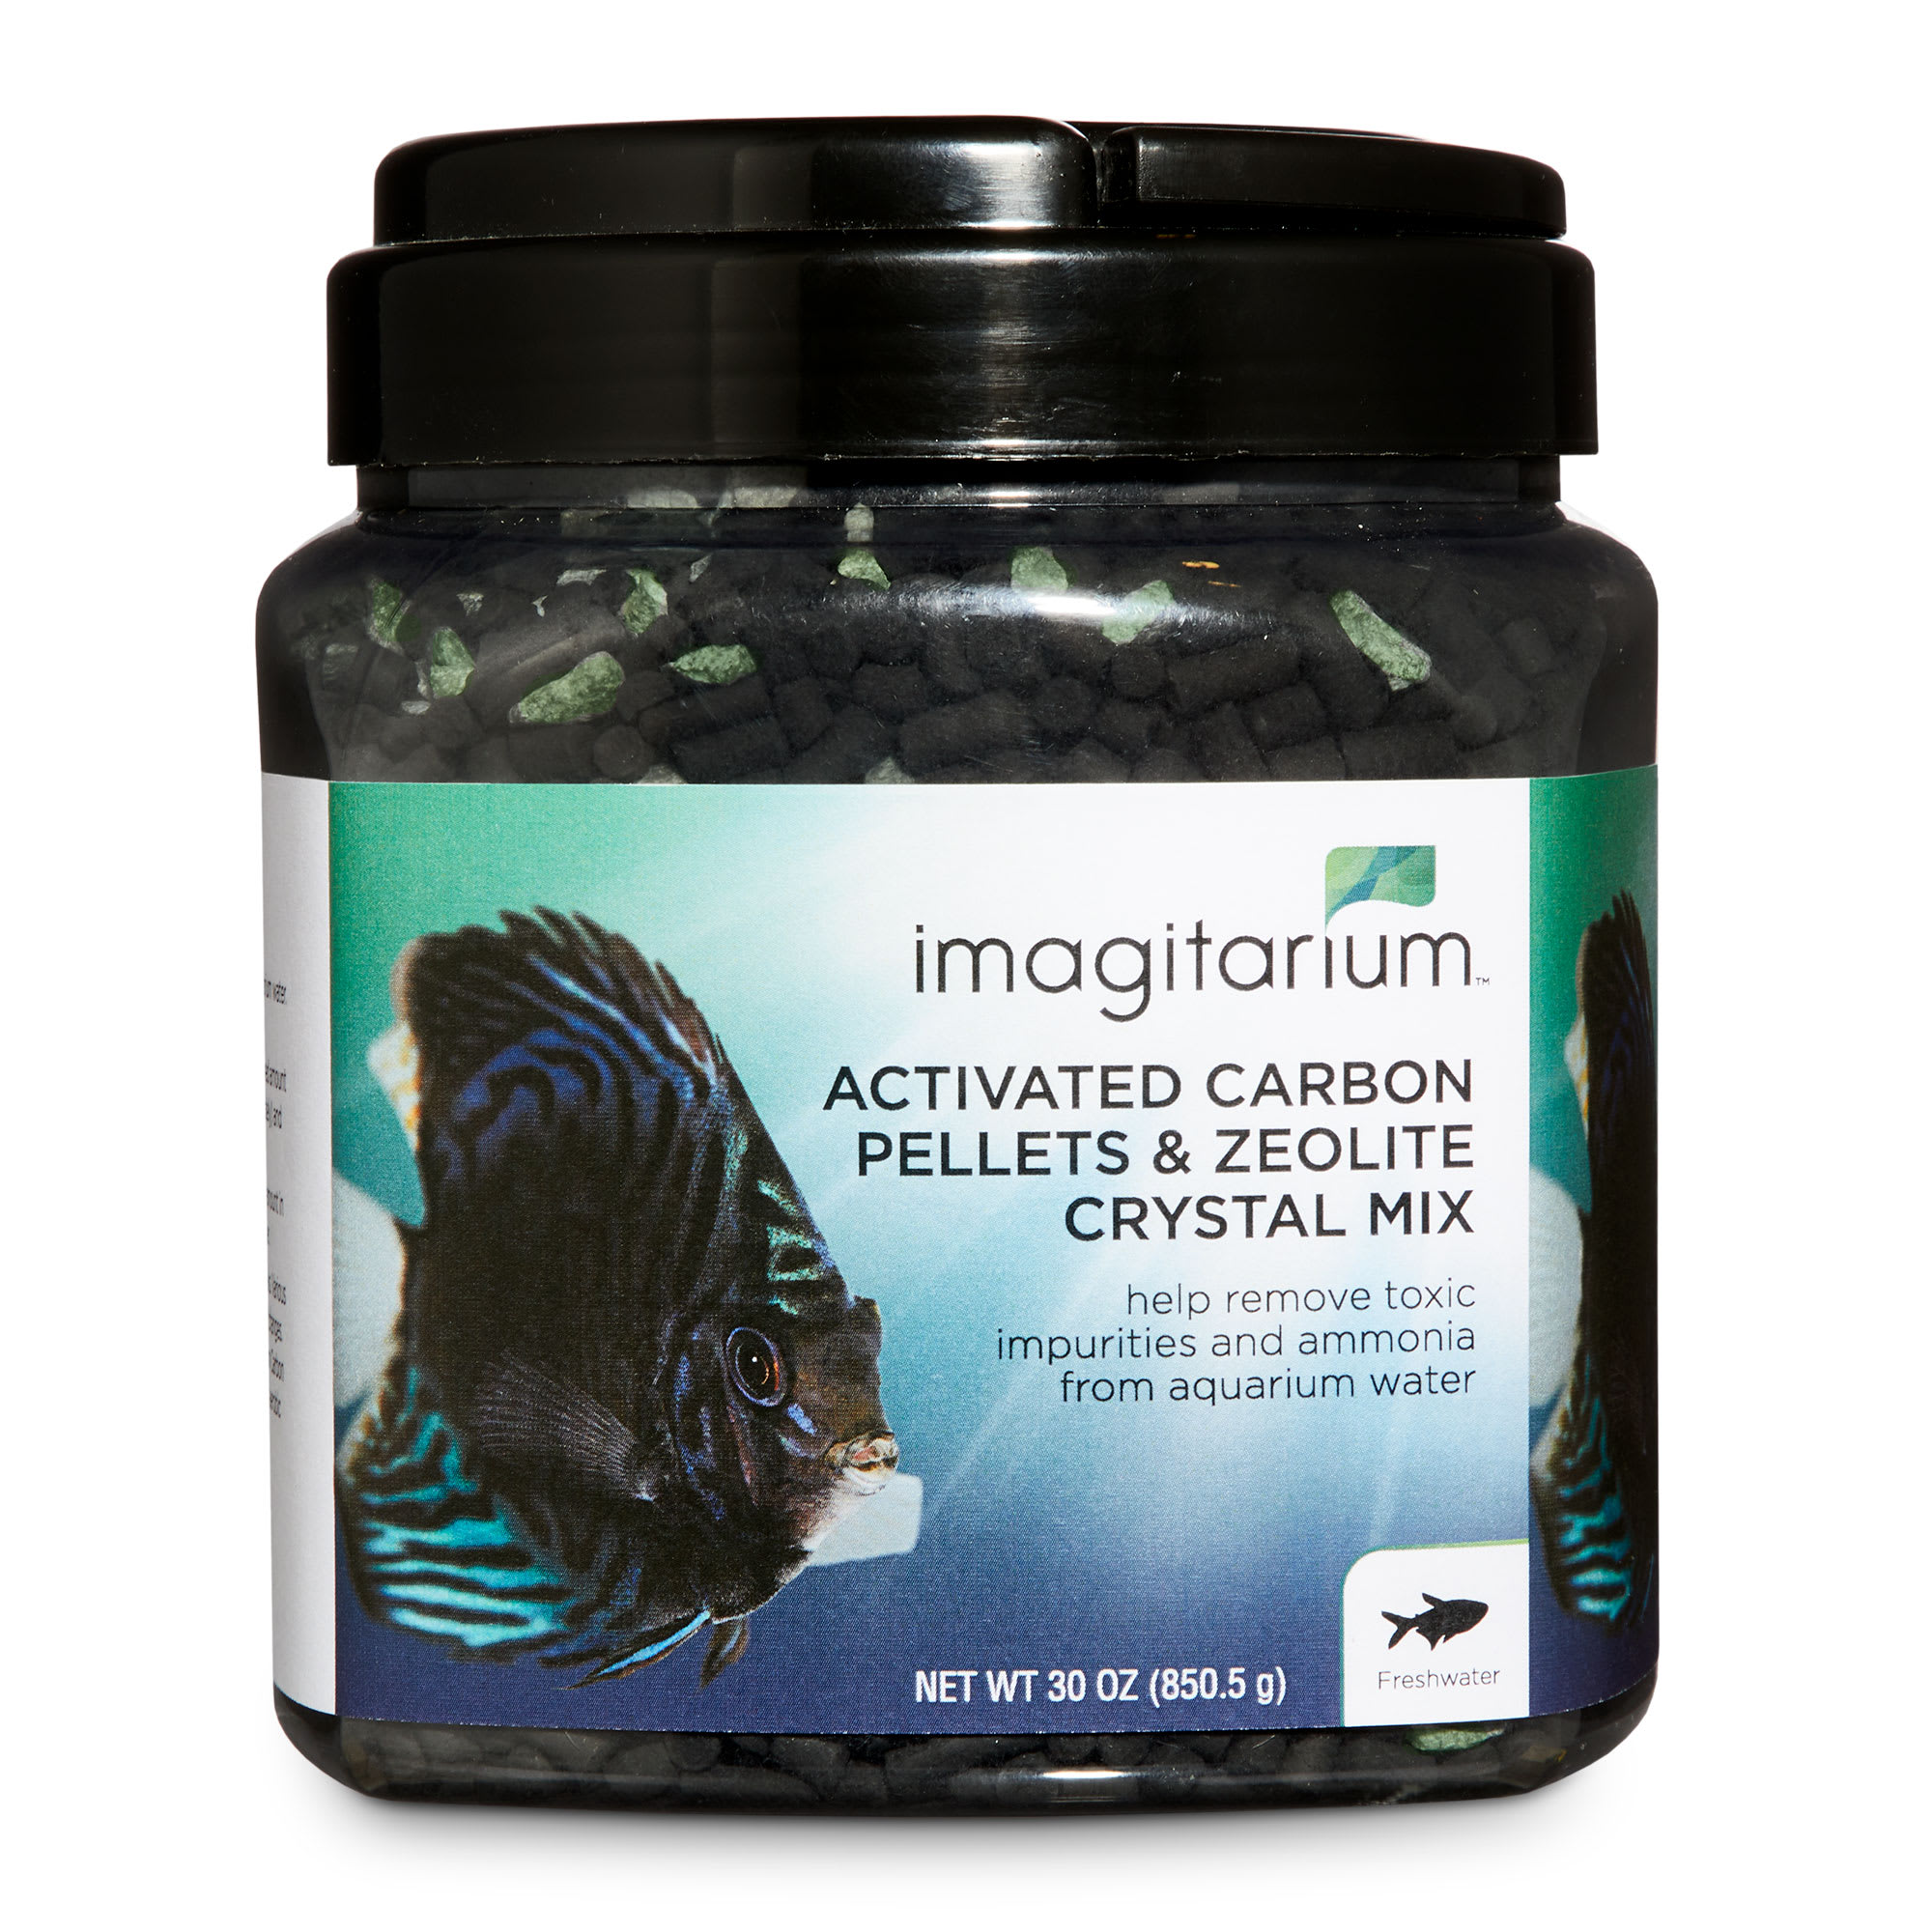 Imagitarium Activated Carbon Pellets & Zeolite Crystal Mix, 30 oz